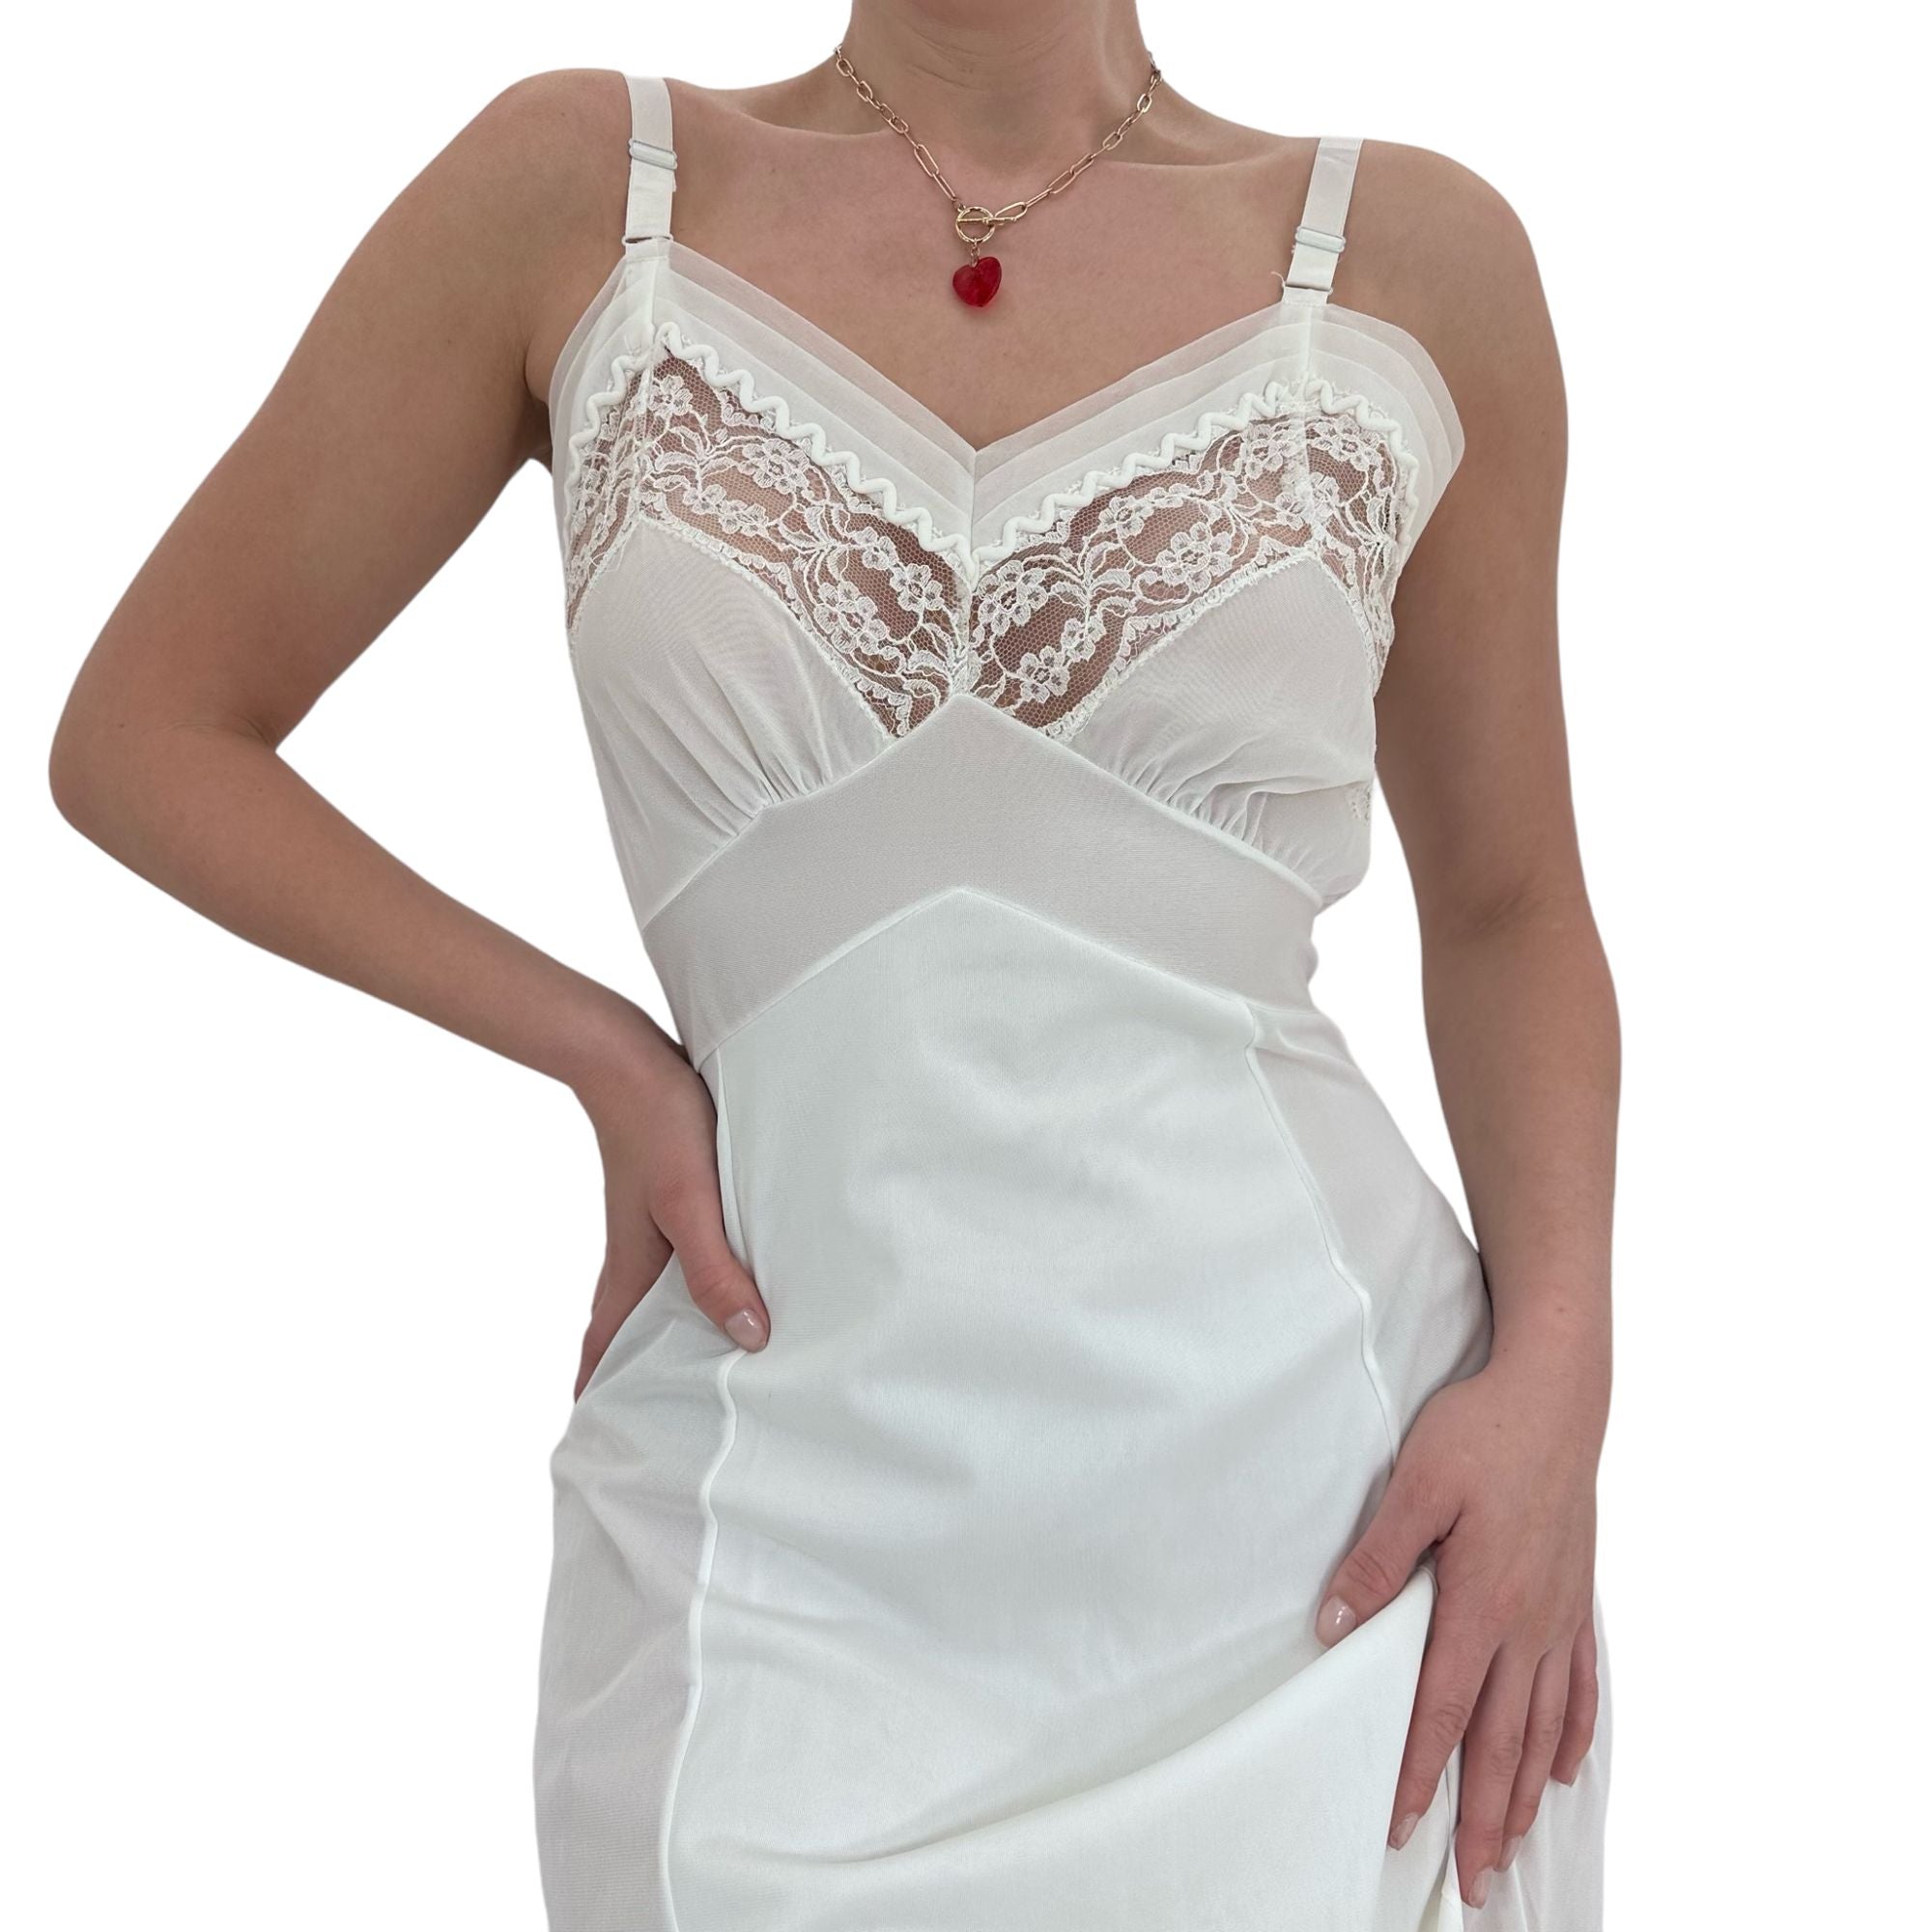 90s Vintage White Slip Dress [M]